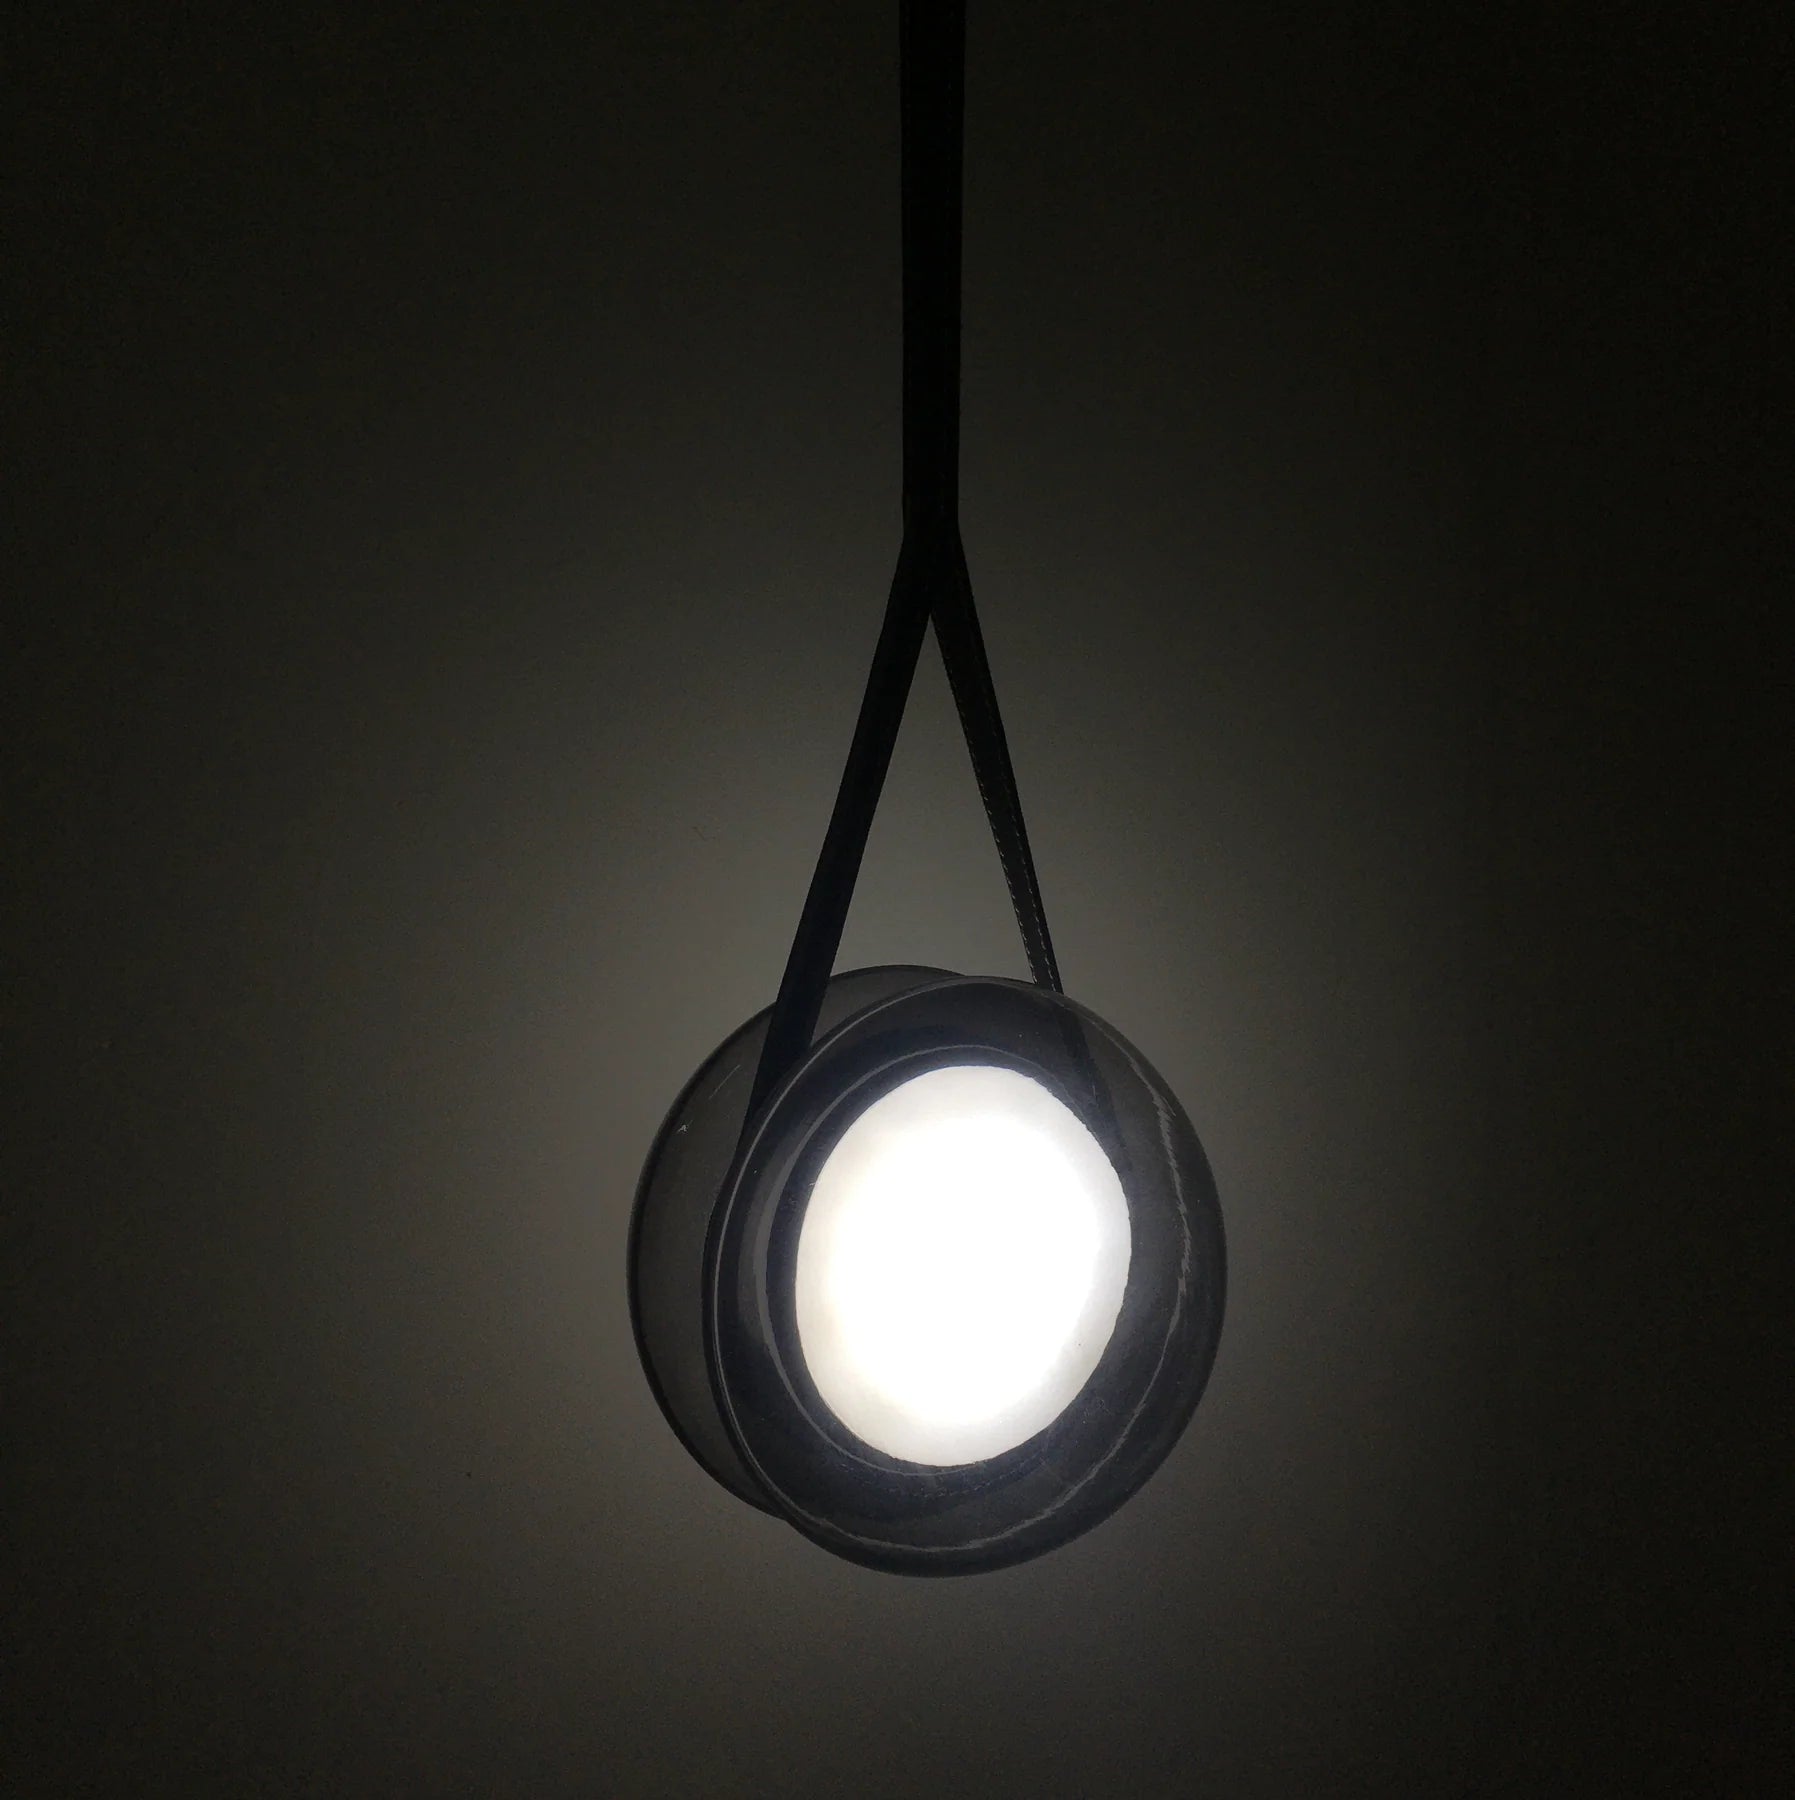 MD3202-B Premium Smoked gray pendant LED ceiling light in Nordic Glass Belt design indoor decorative lighting, for Loft Restaurant, Bar, Cafe, Restaurant, hotel (Single Piece)